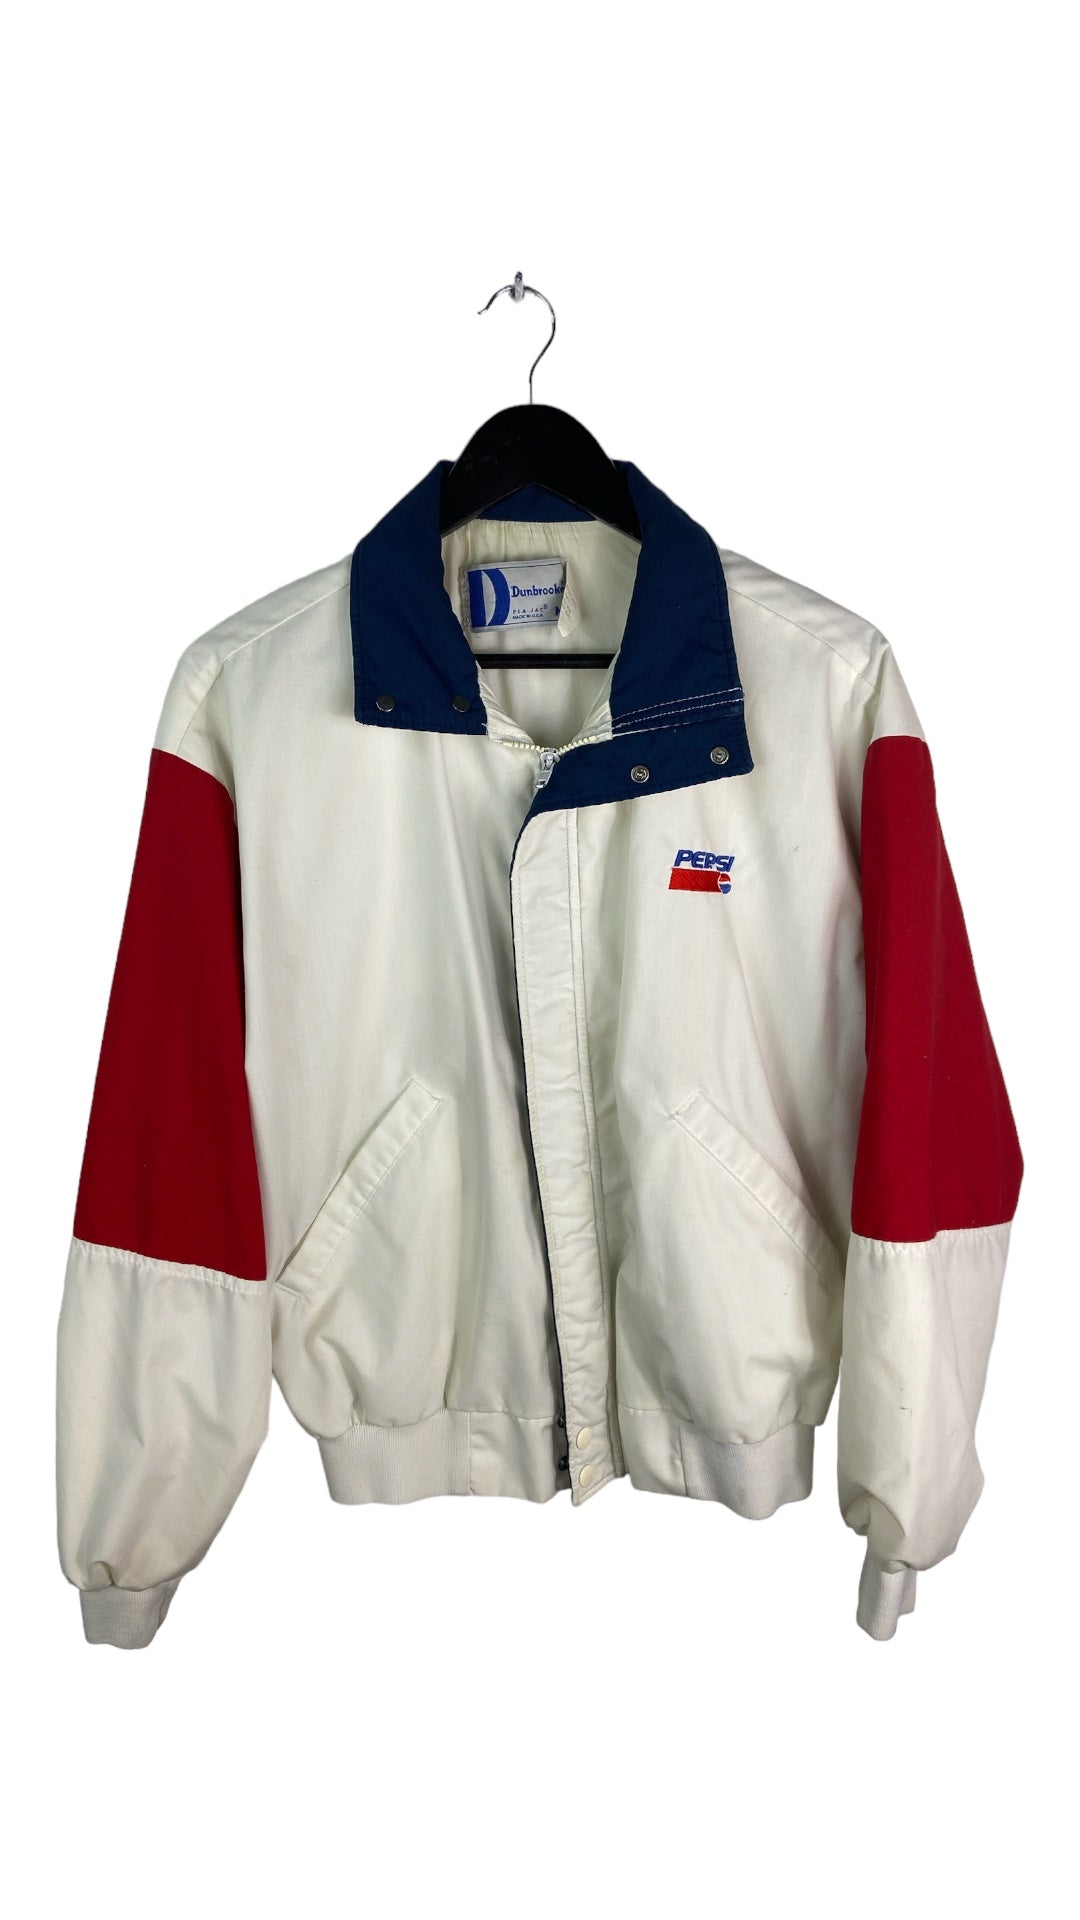 VTG Pepsi Dunbrooke White Windbreaker Jacket Sz M/L